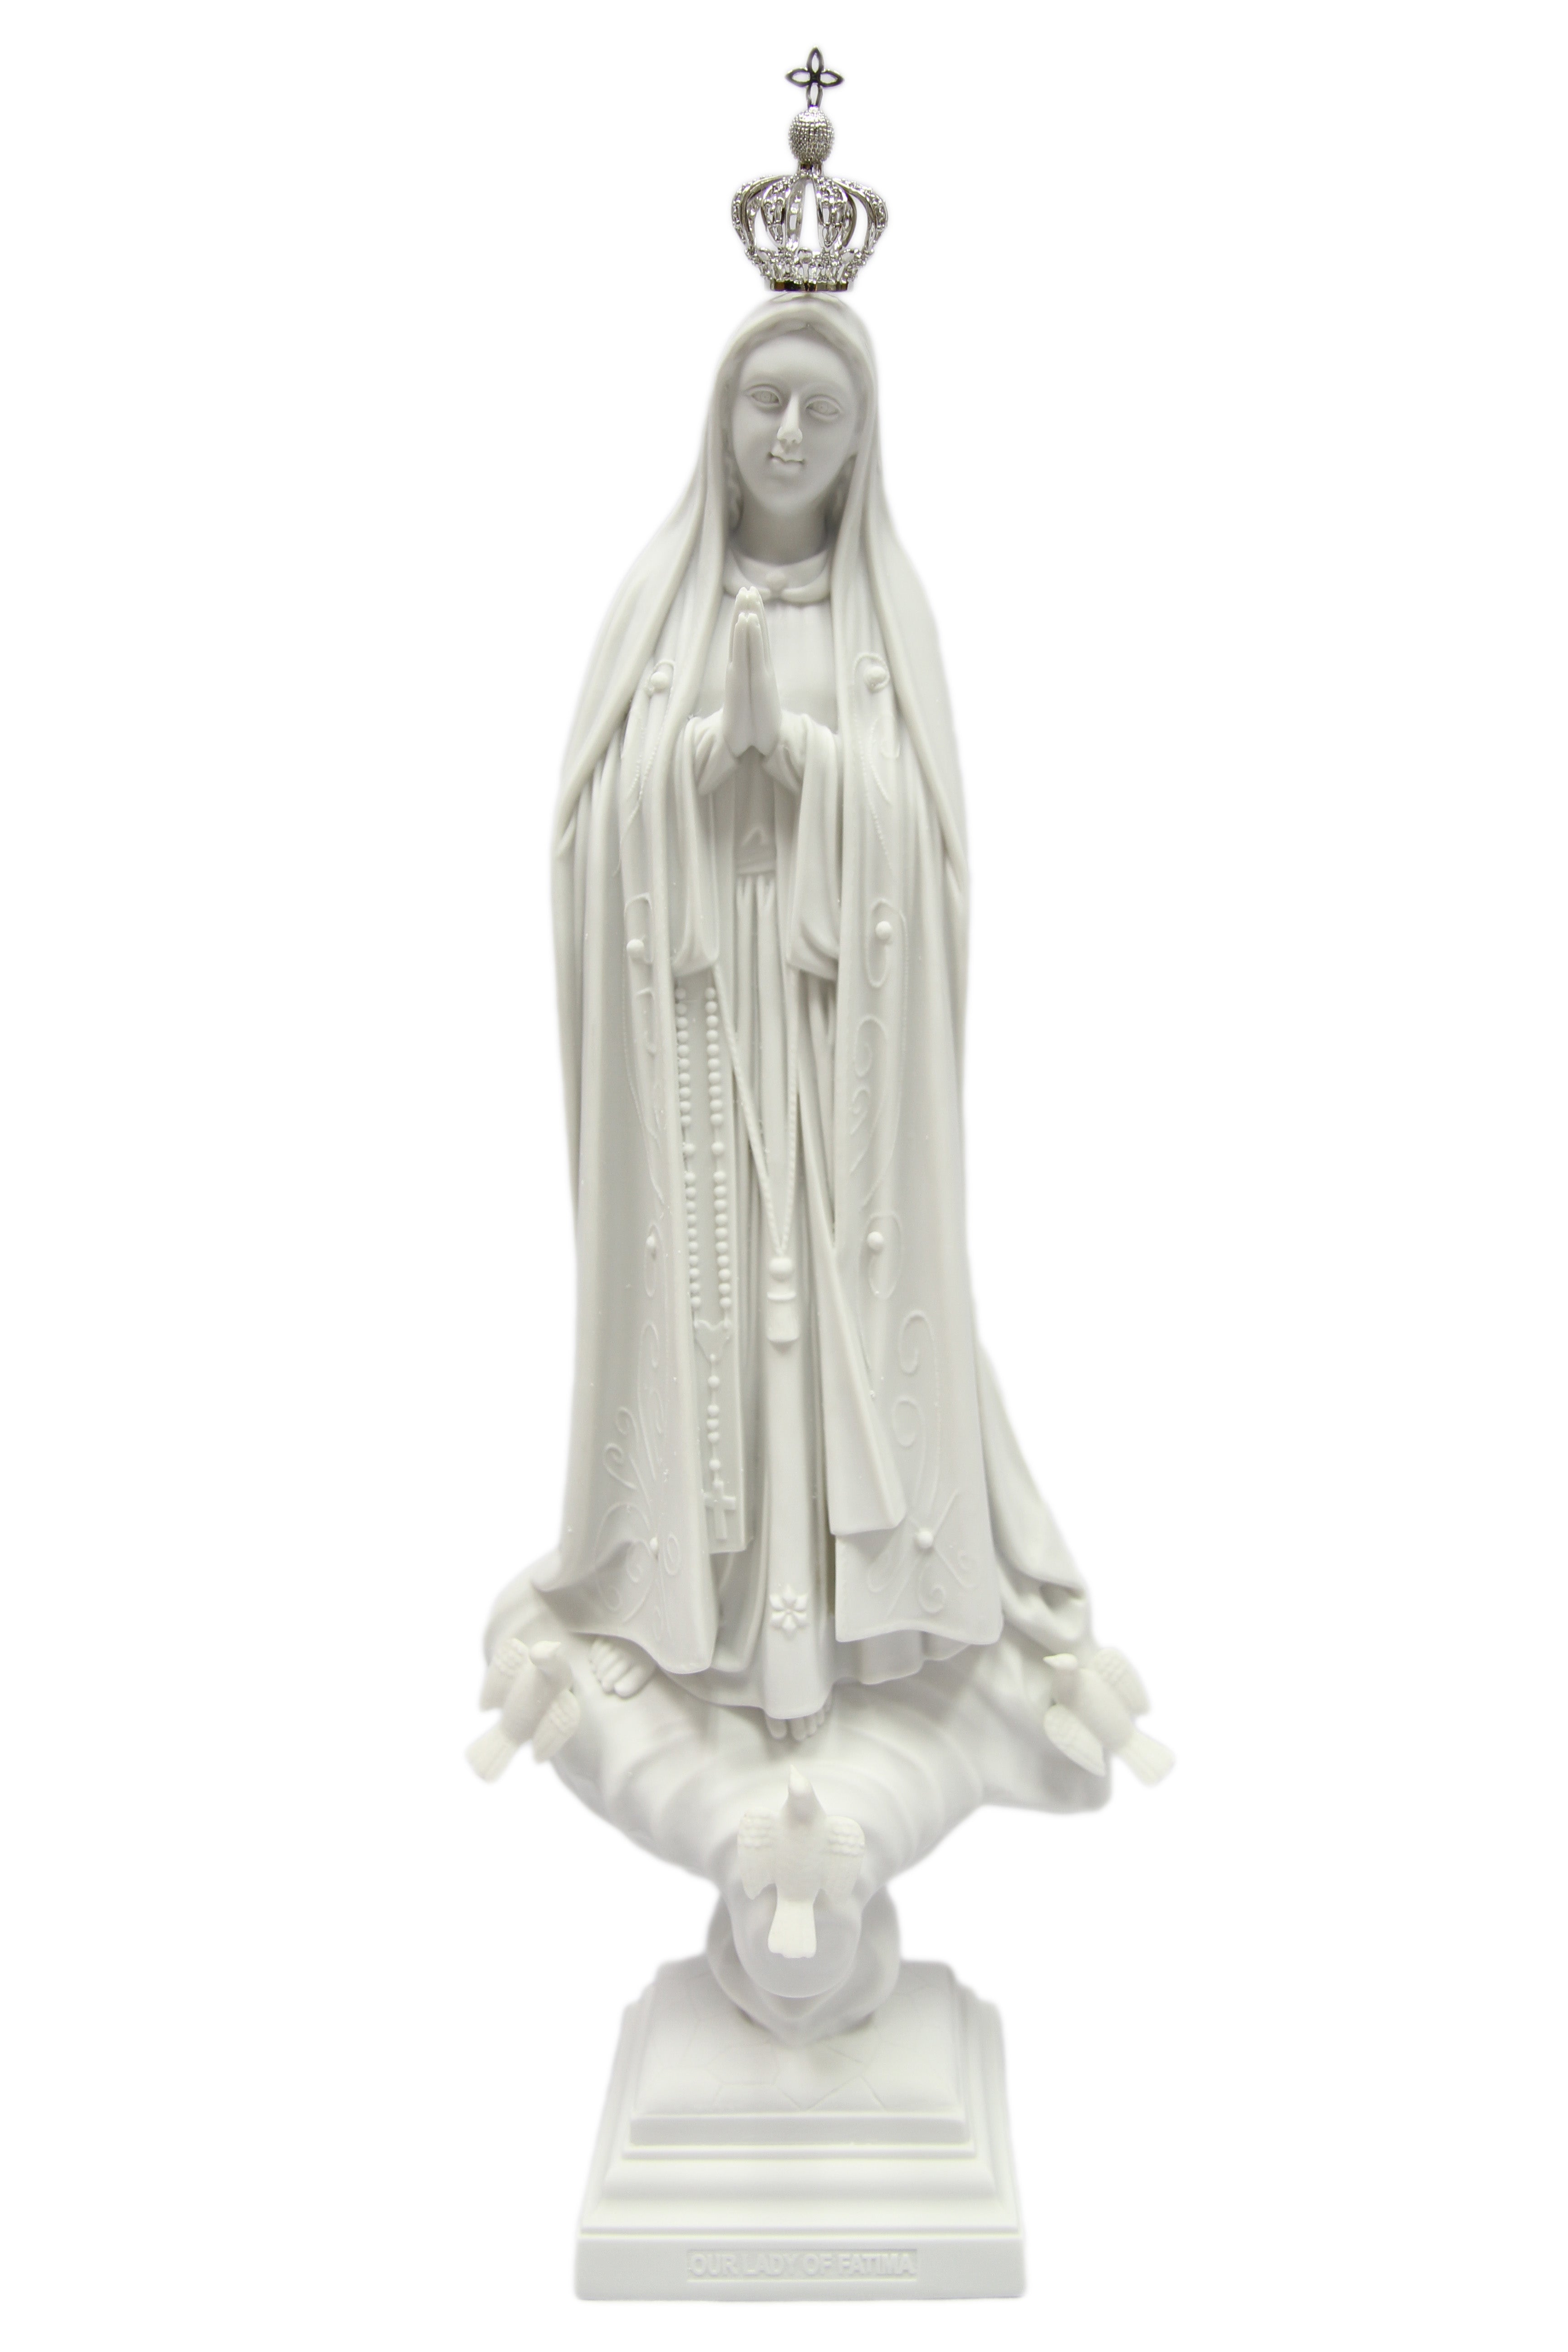 20 Inch Our Lady of Fatima Virgin Mary Madonna Catholic Statue Religious Figurine